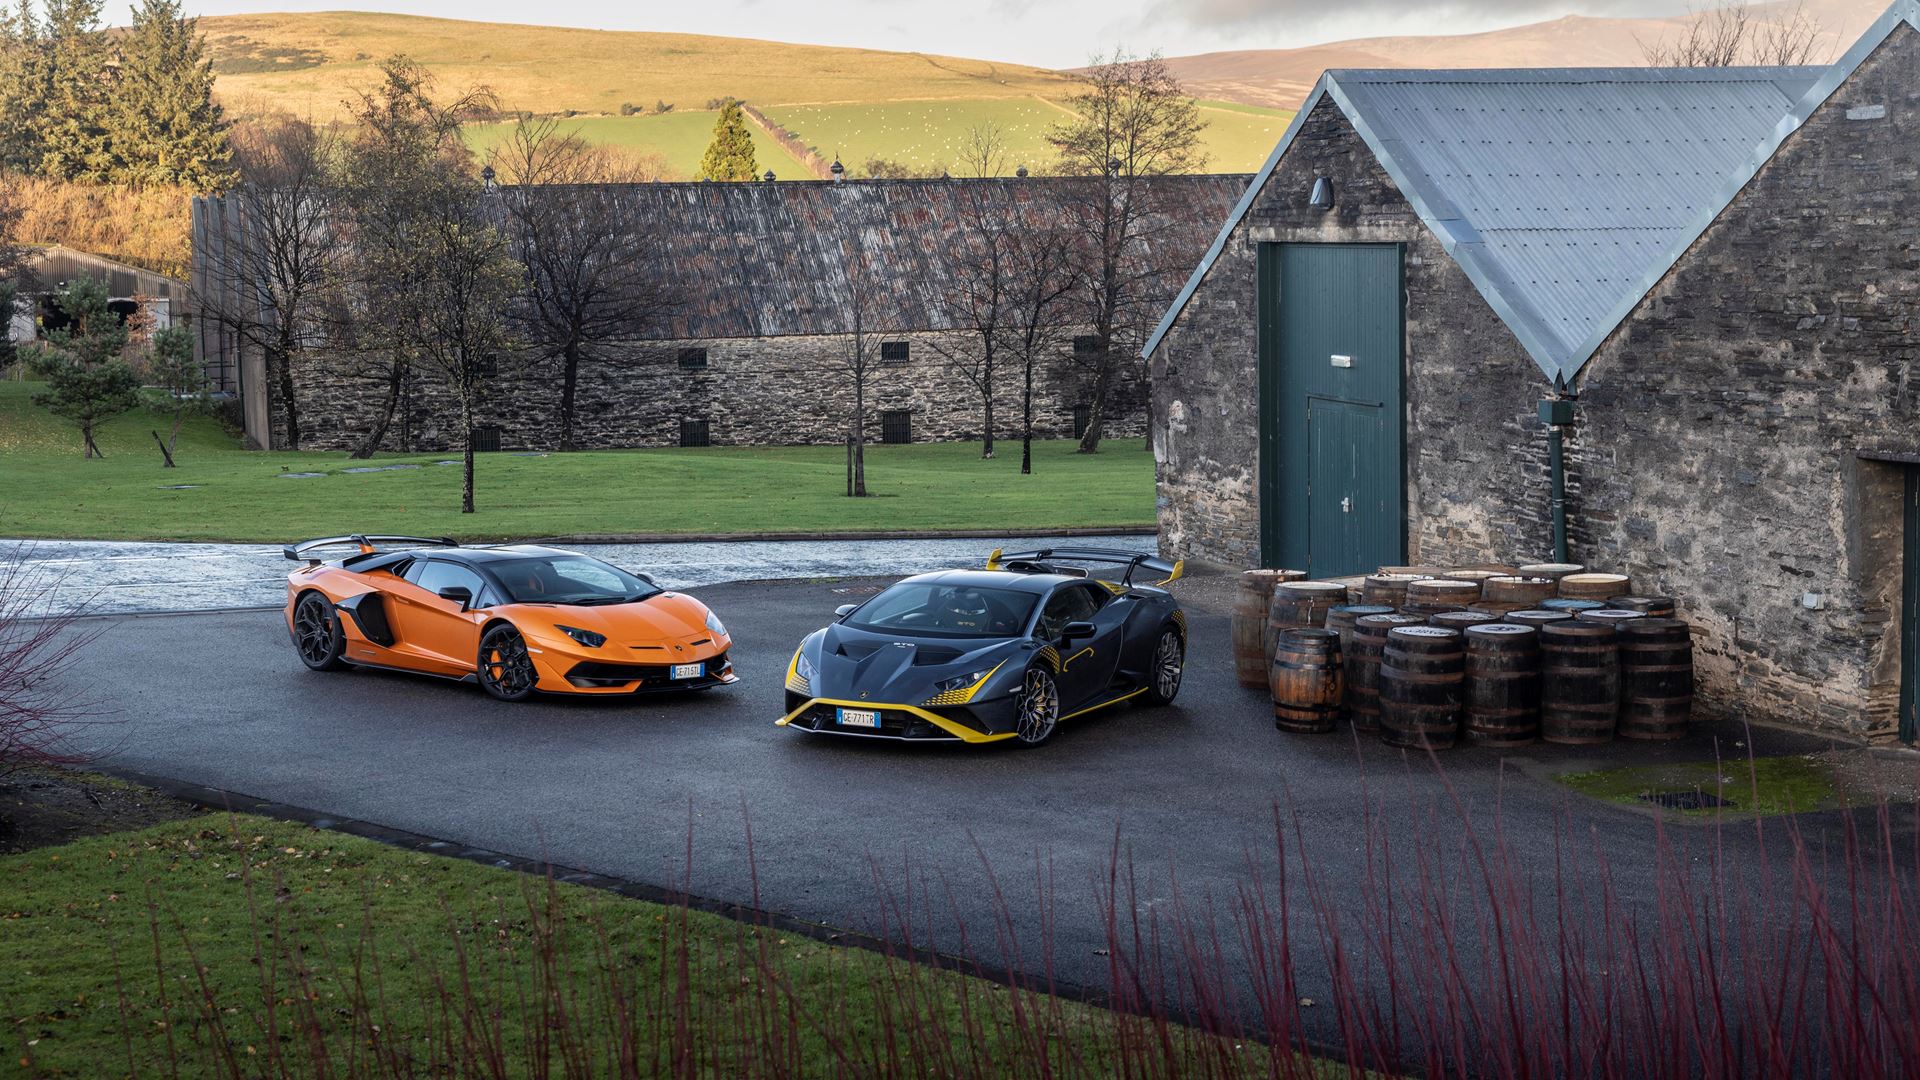 Automobili Lamborghini: Cars, stars and art in the Scottish Cairngorms - Image 7